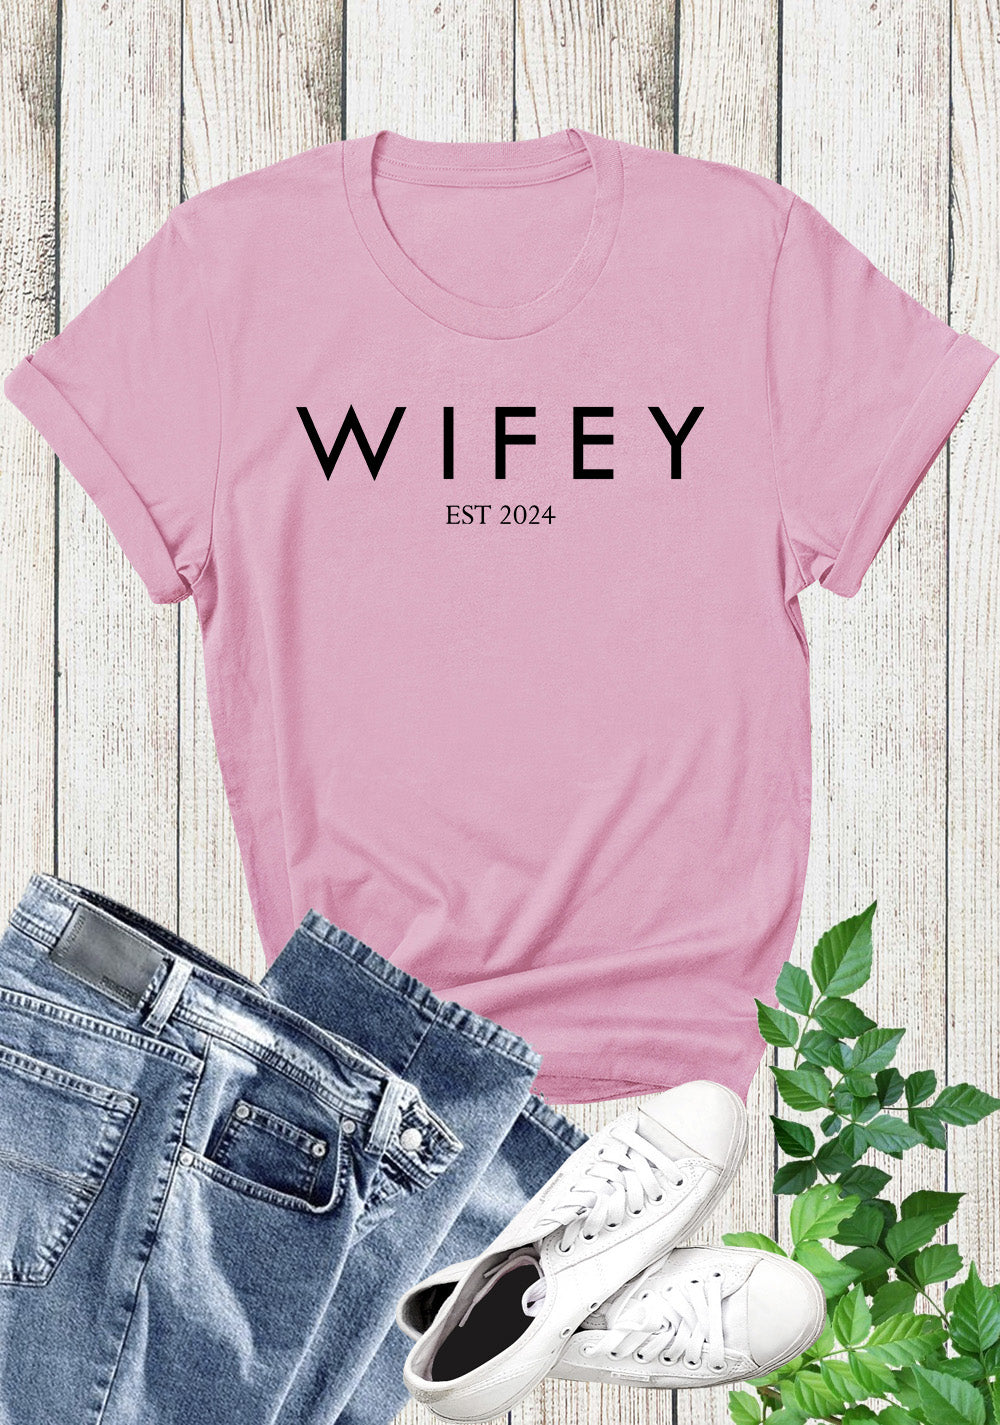 Wifey T Shirt Personalized